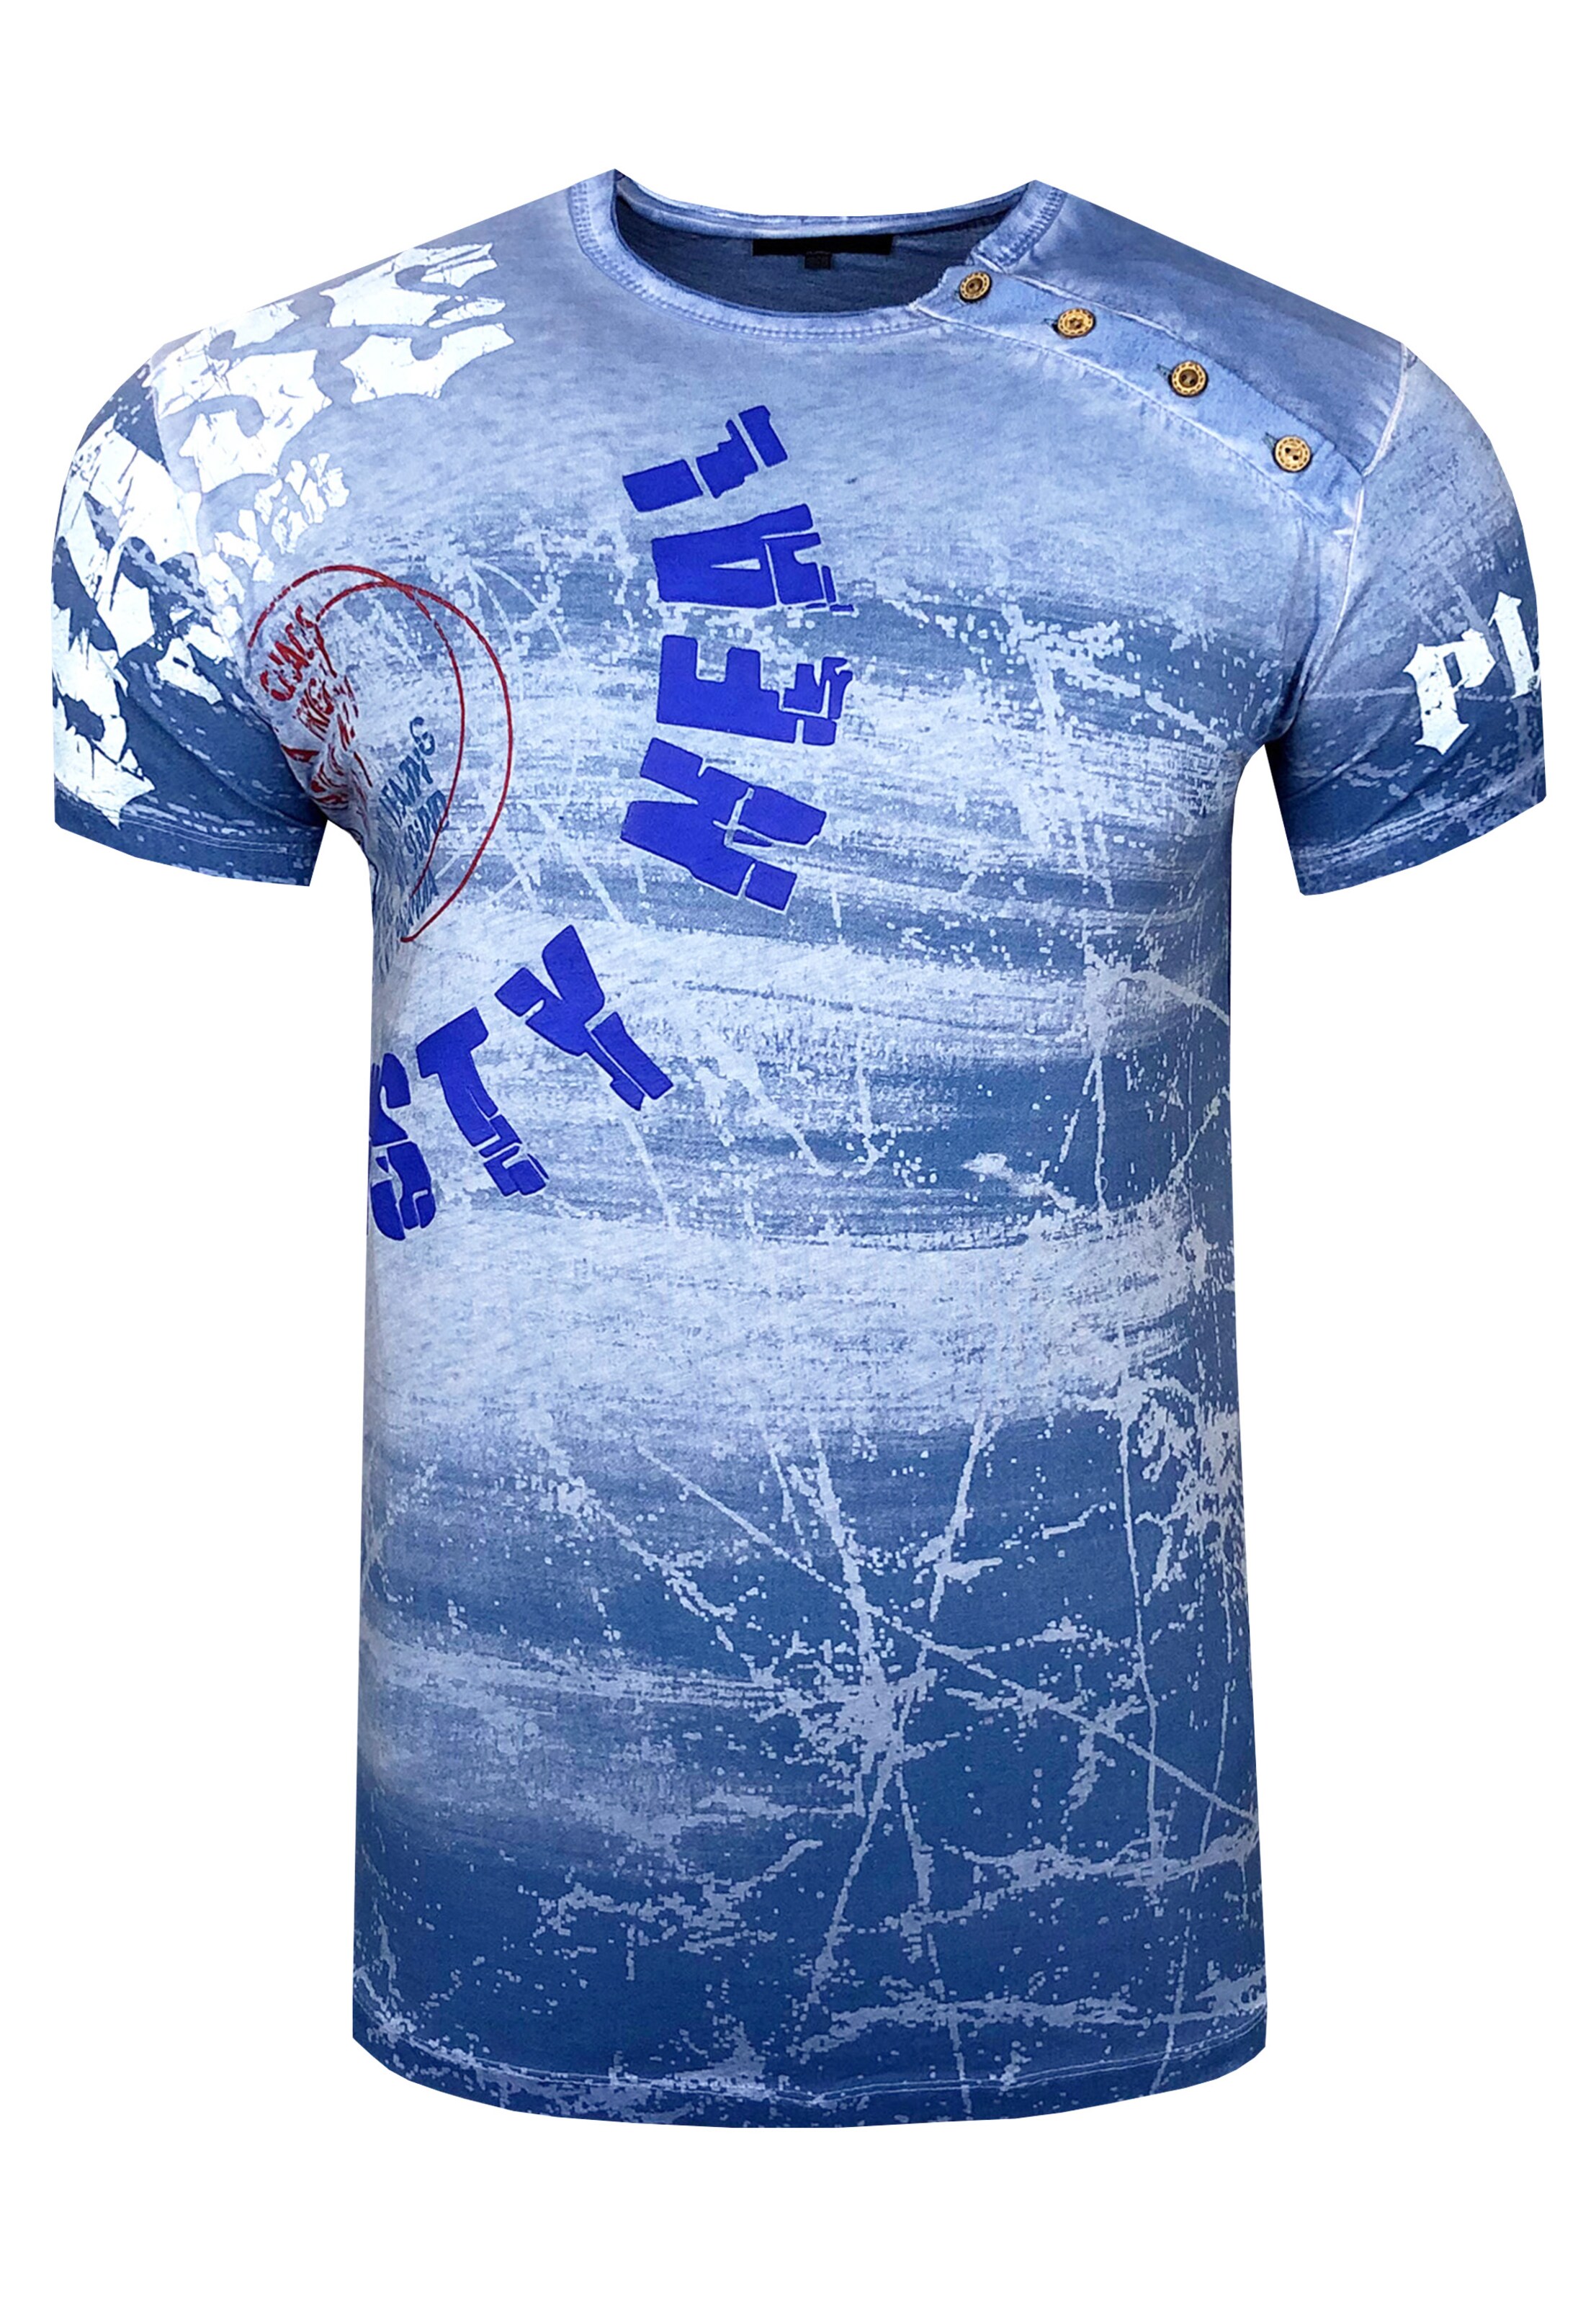 Männer Shirts Rusty Neal T-Shirt in Blau, Dunkelblau - VN57490